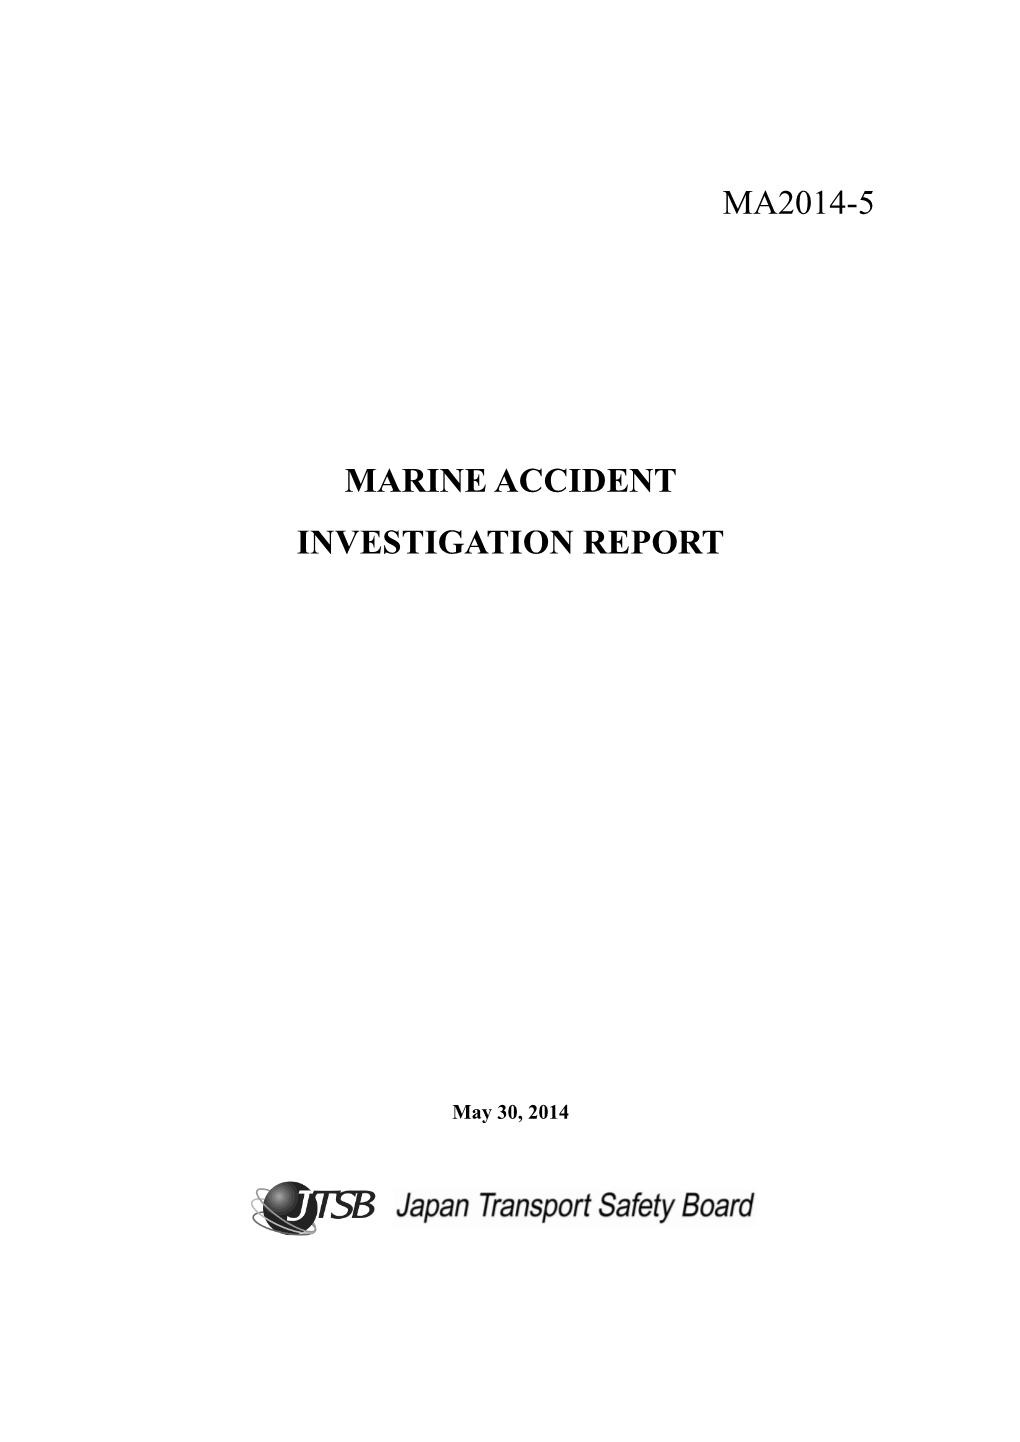 Ma2014-5 Marine Accident Investigation Report